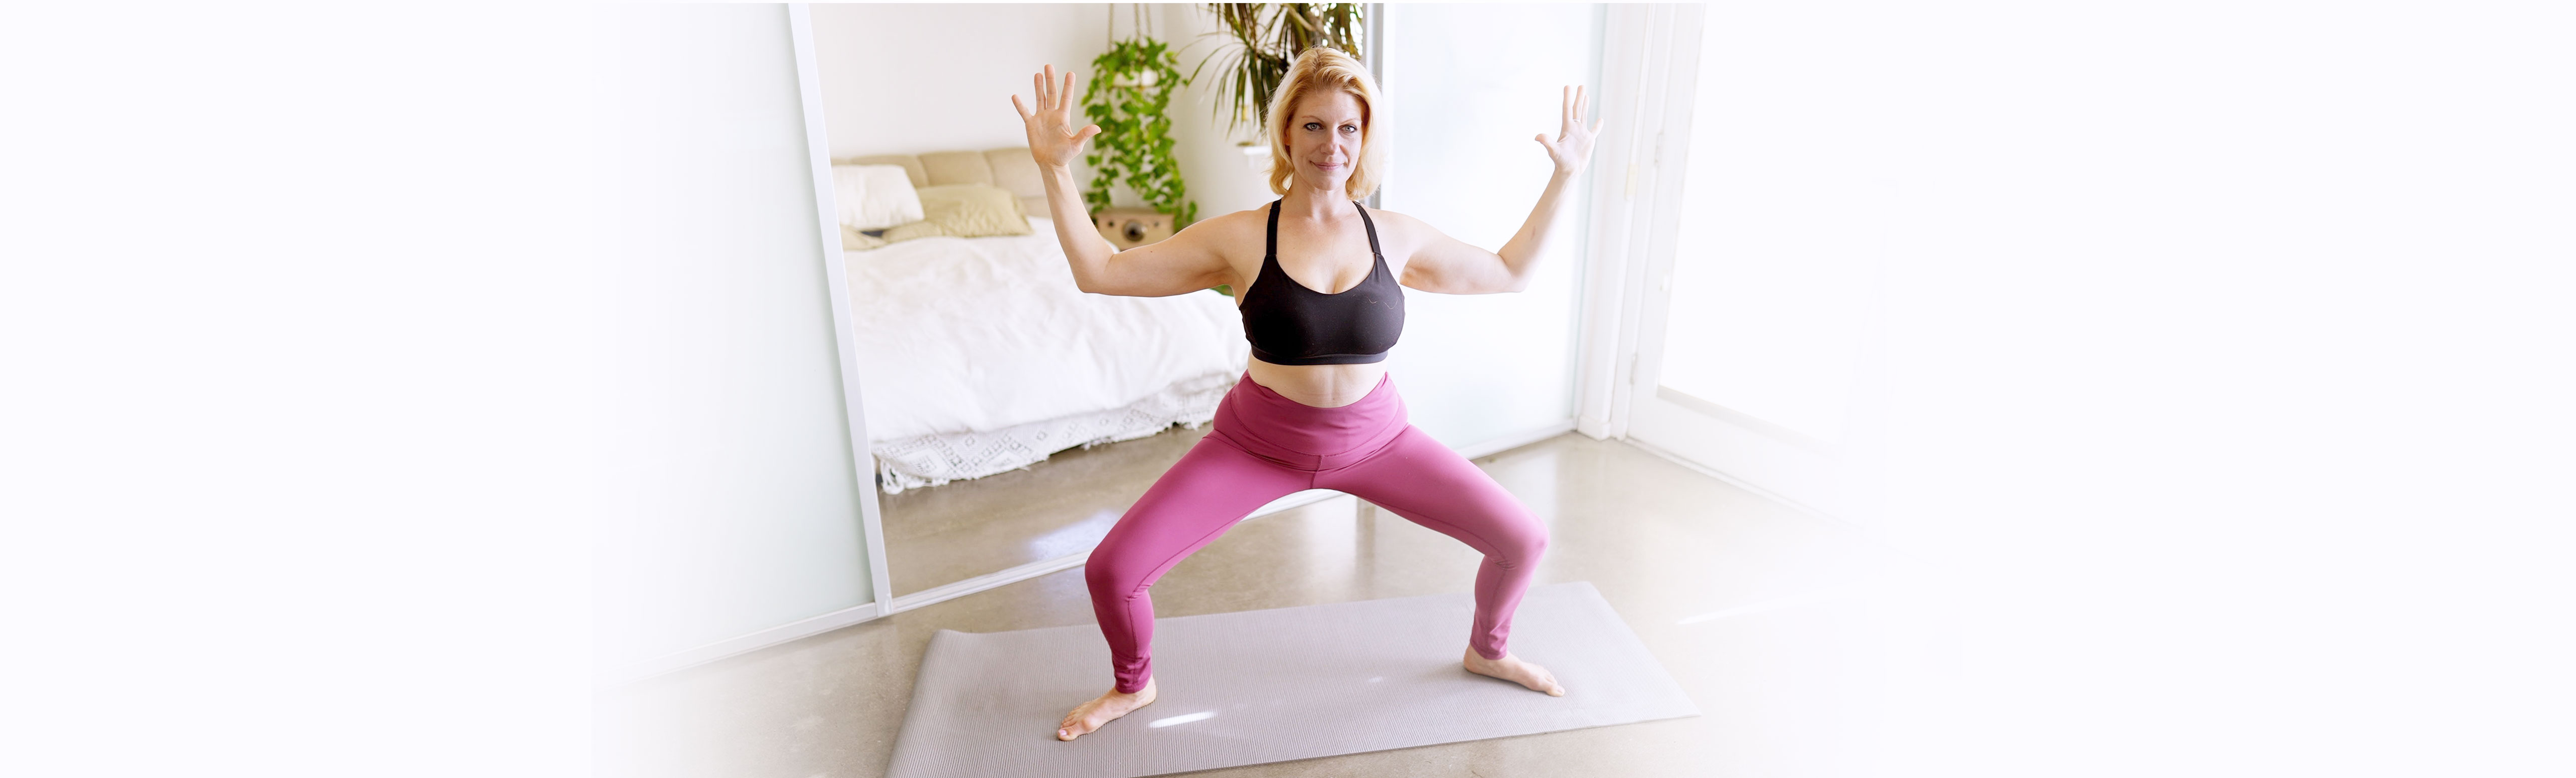 Masculine And Feminine Energy: Find Your Unique Balance – Brett Larkin Yoga